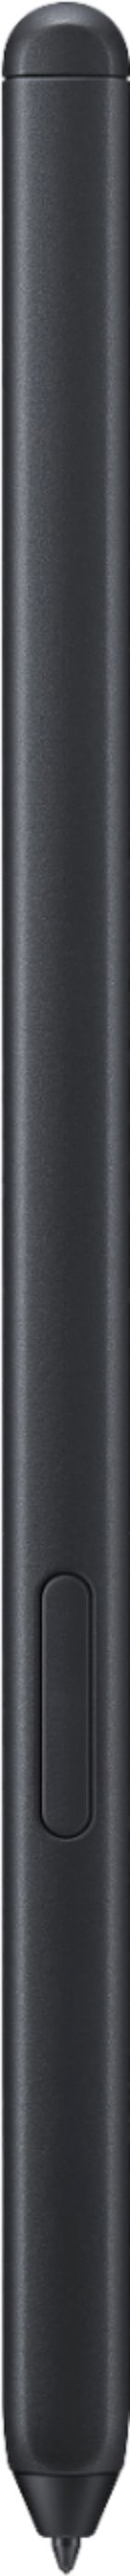 Samsung - Galaxy S21 Ultra S Pen - Black